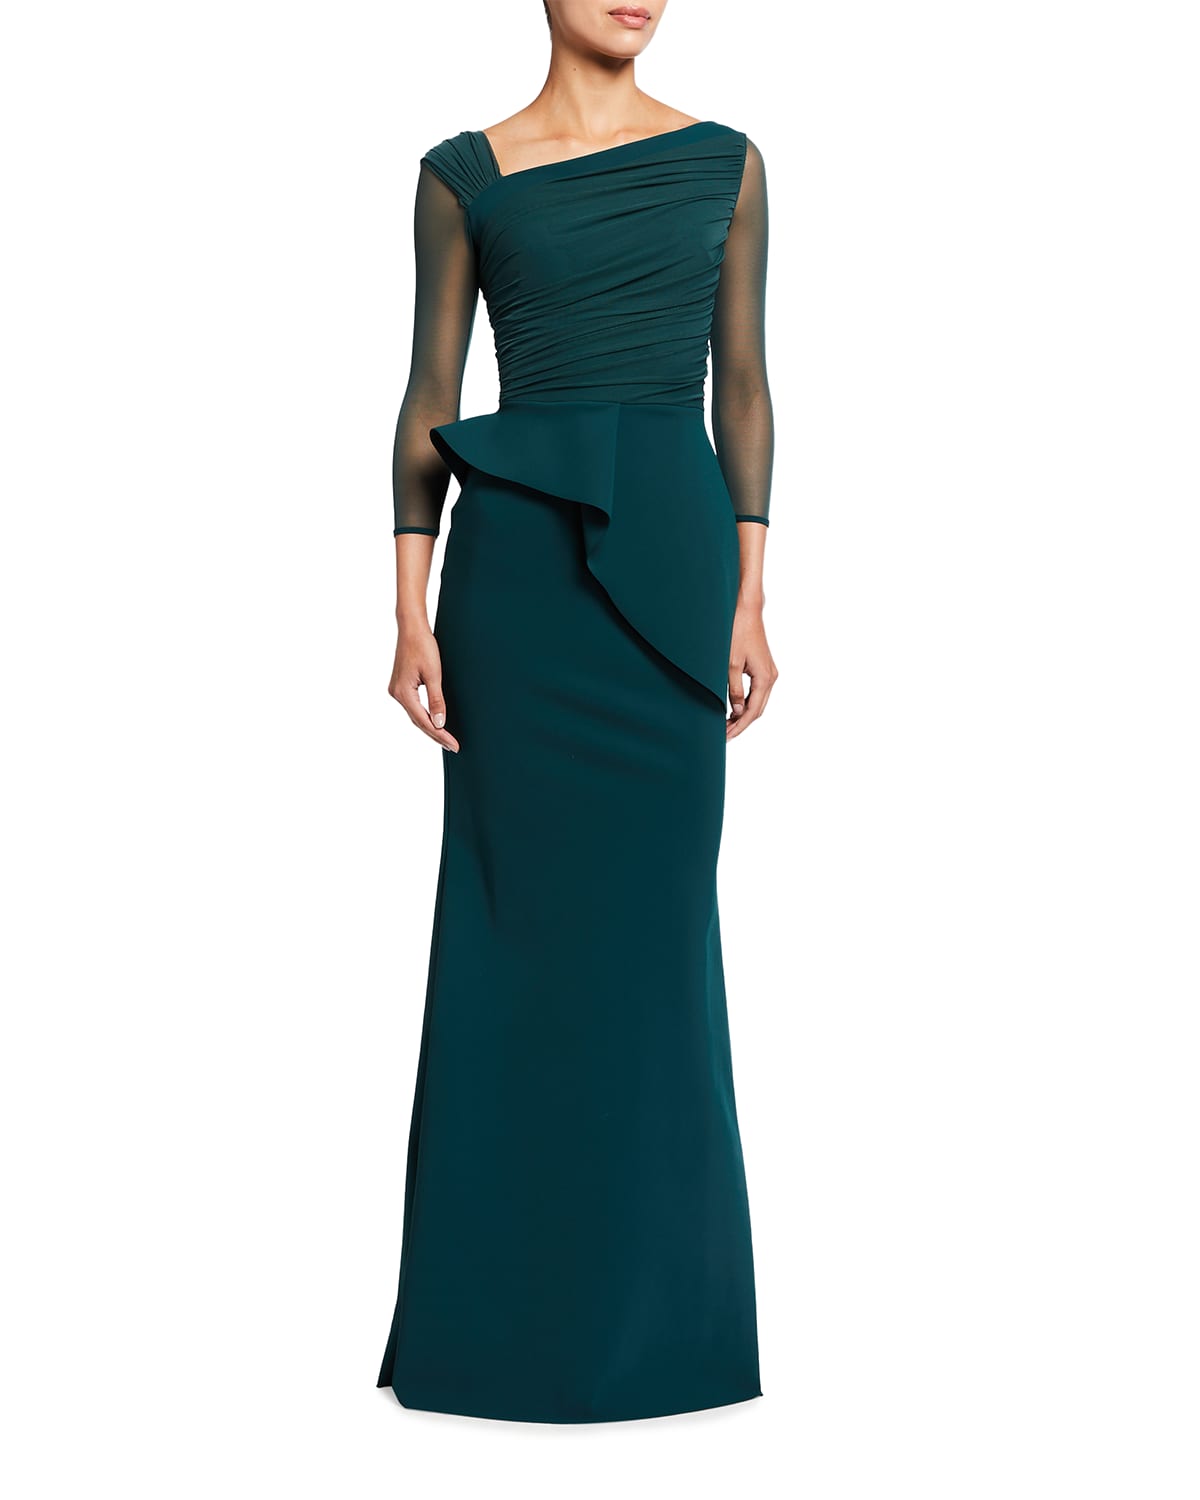 Chiara Boni La Petite Robe Rippy Asymmetrical 3/4-Sleeve Illusion Gown